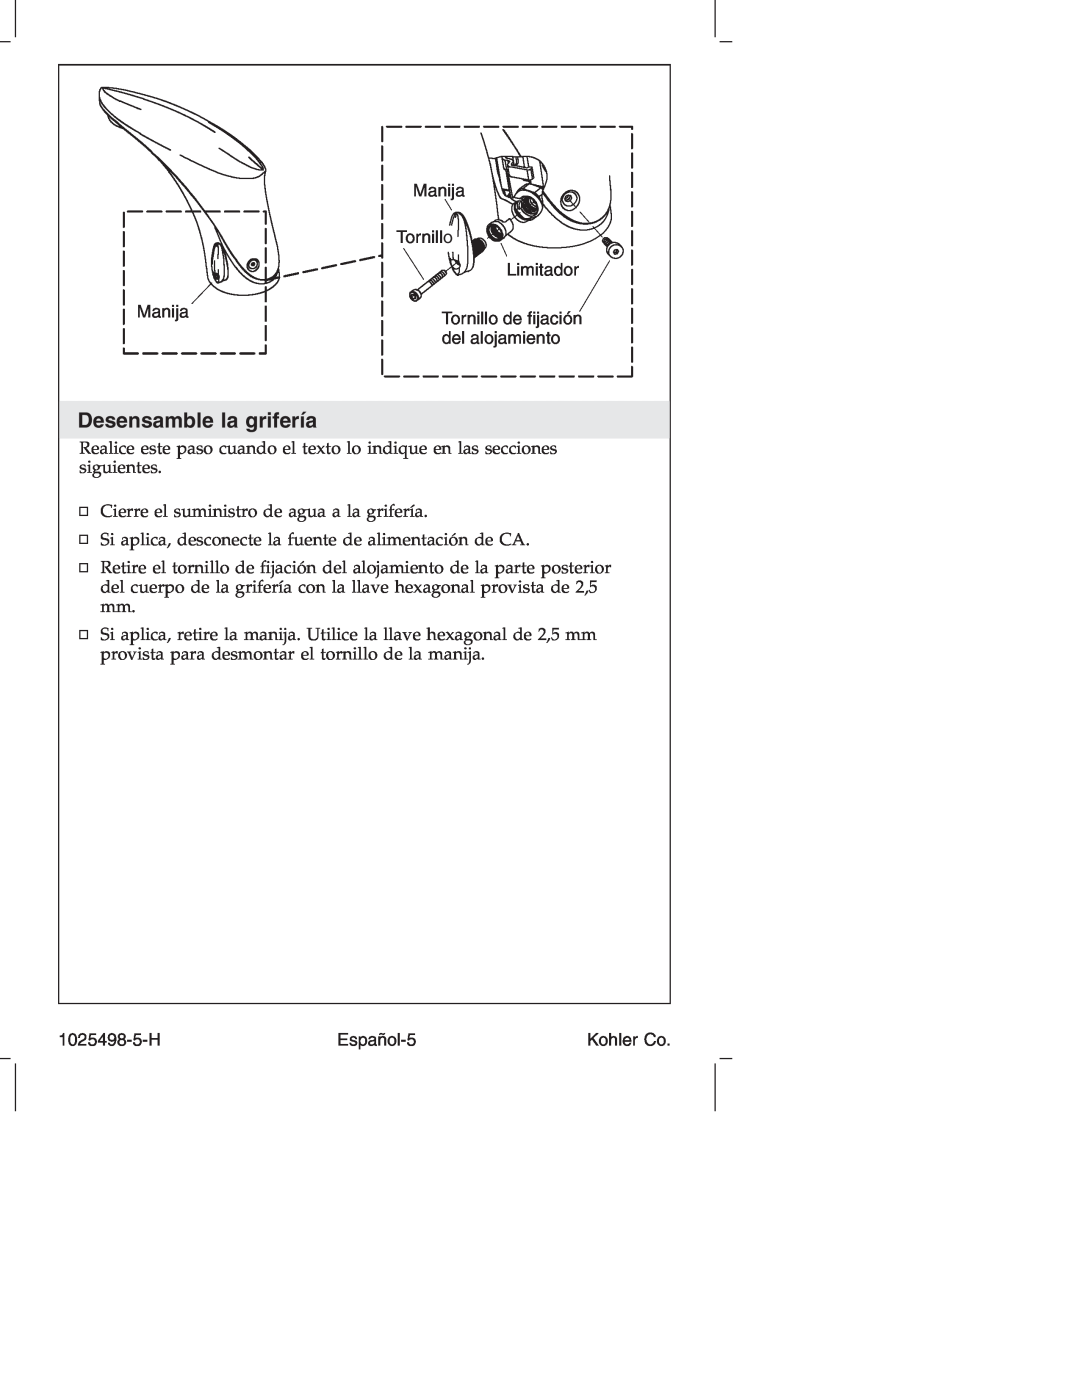 Kohler k-10950, k-10951 manual Desensamble la grifería 